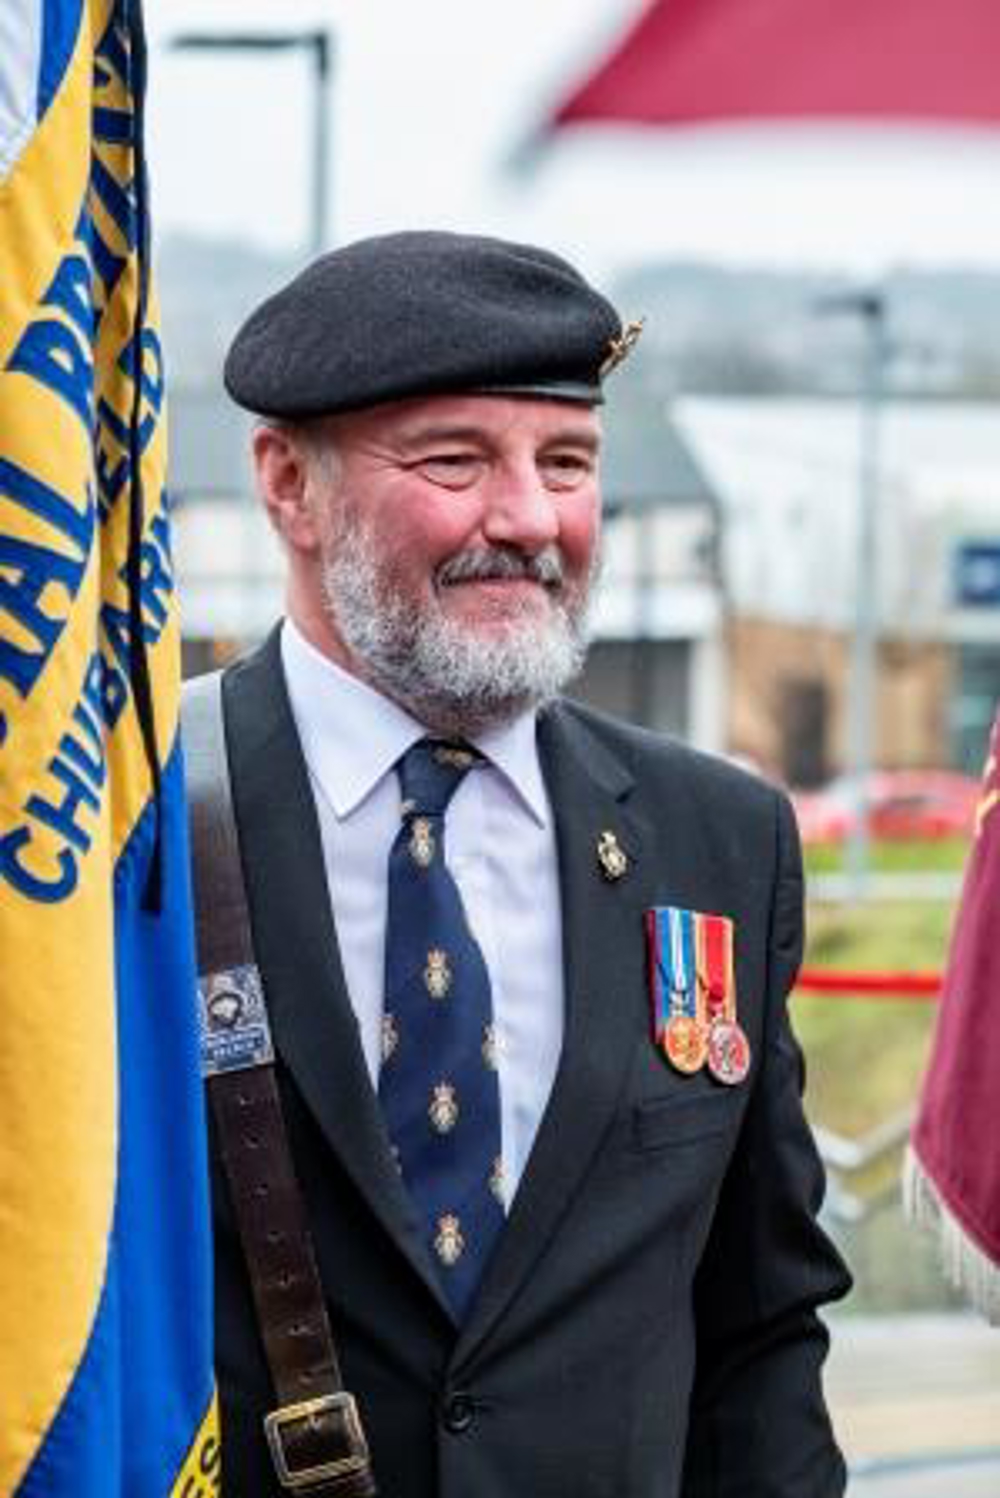 Ex-service man holding flag